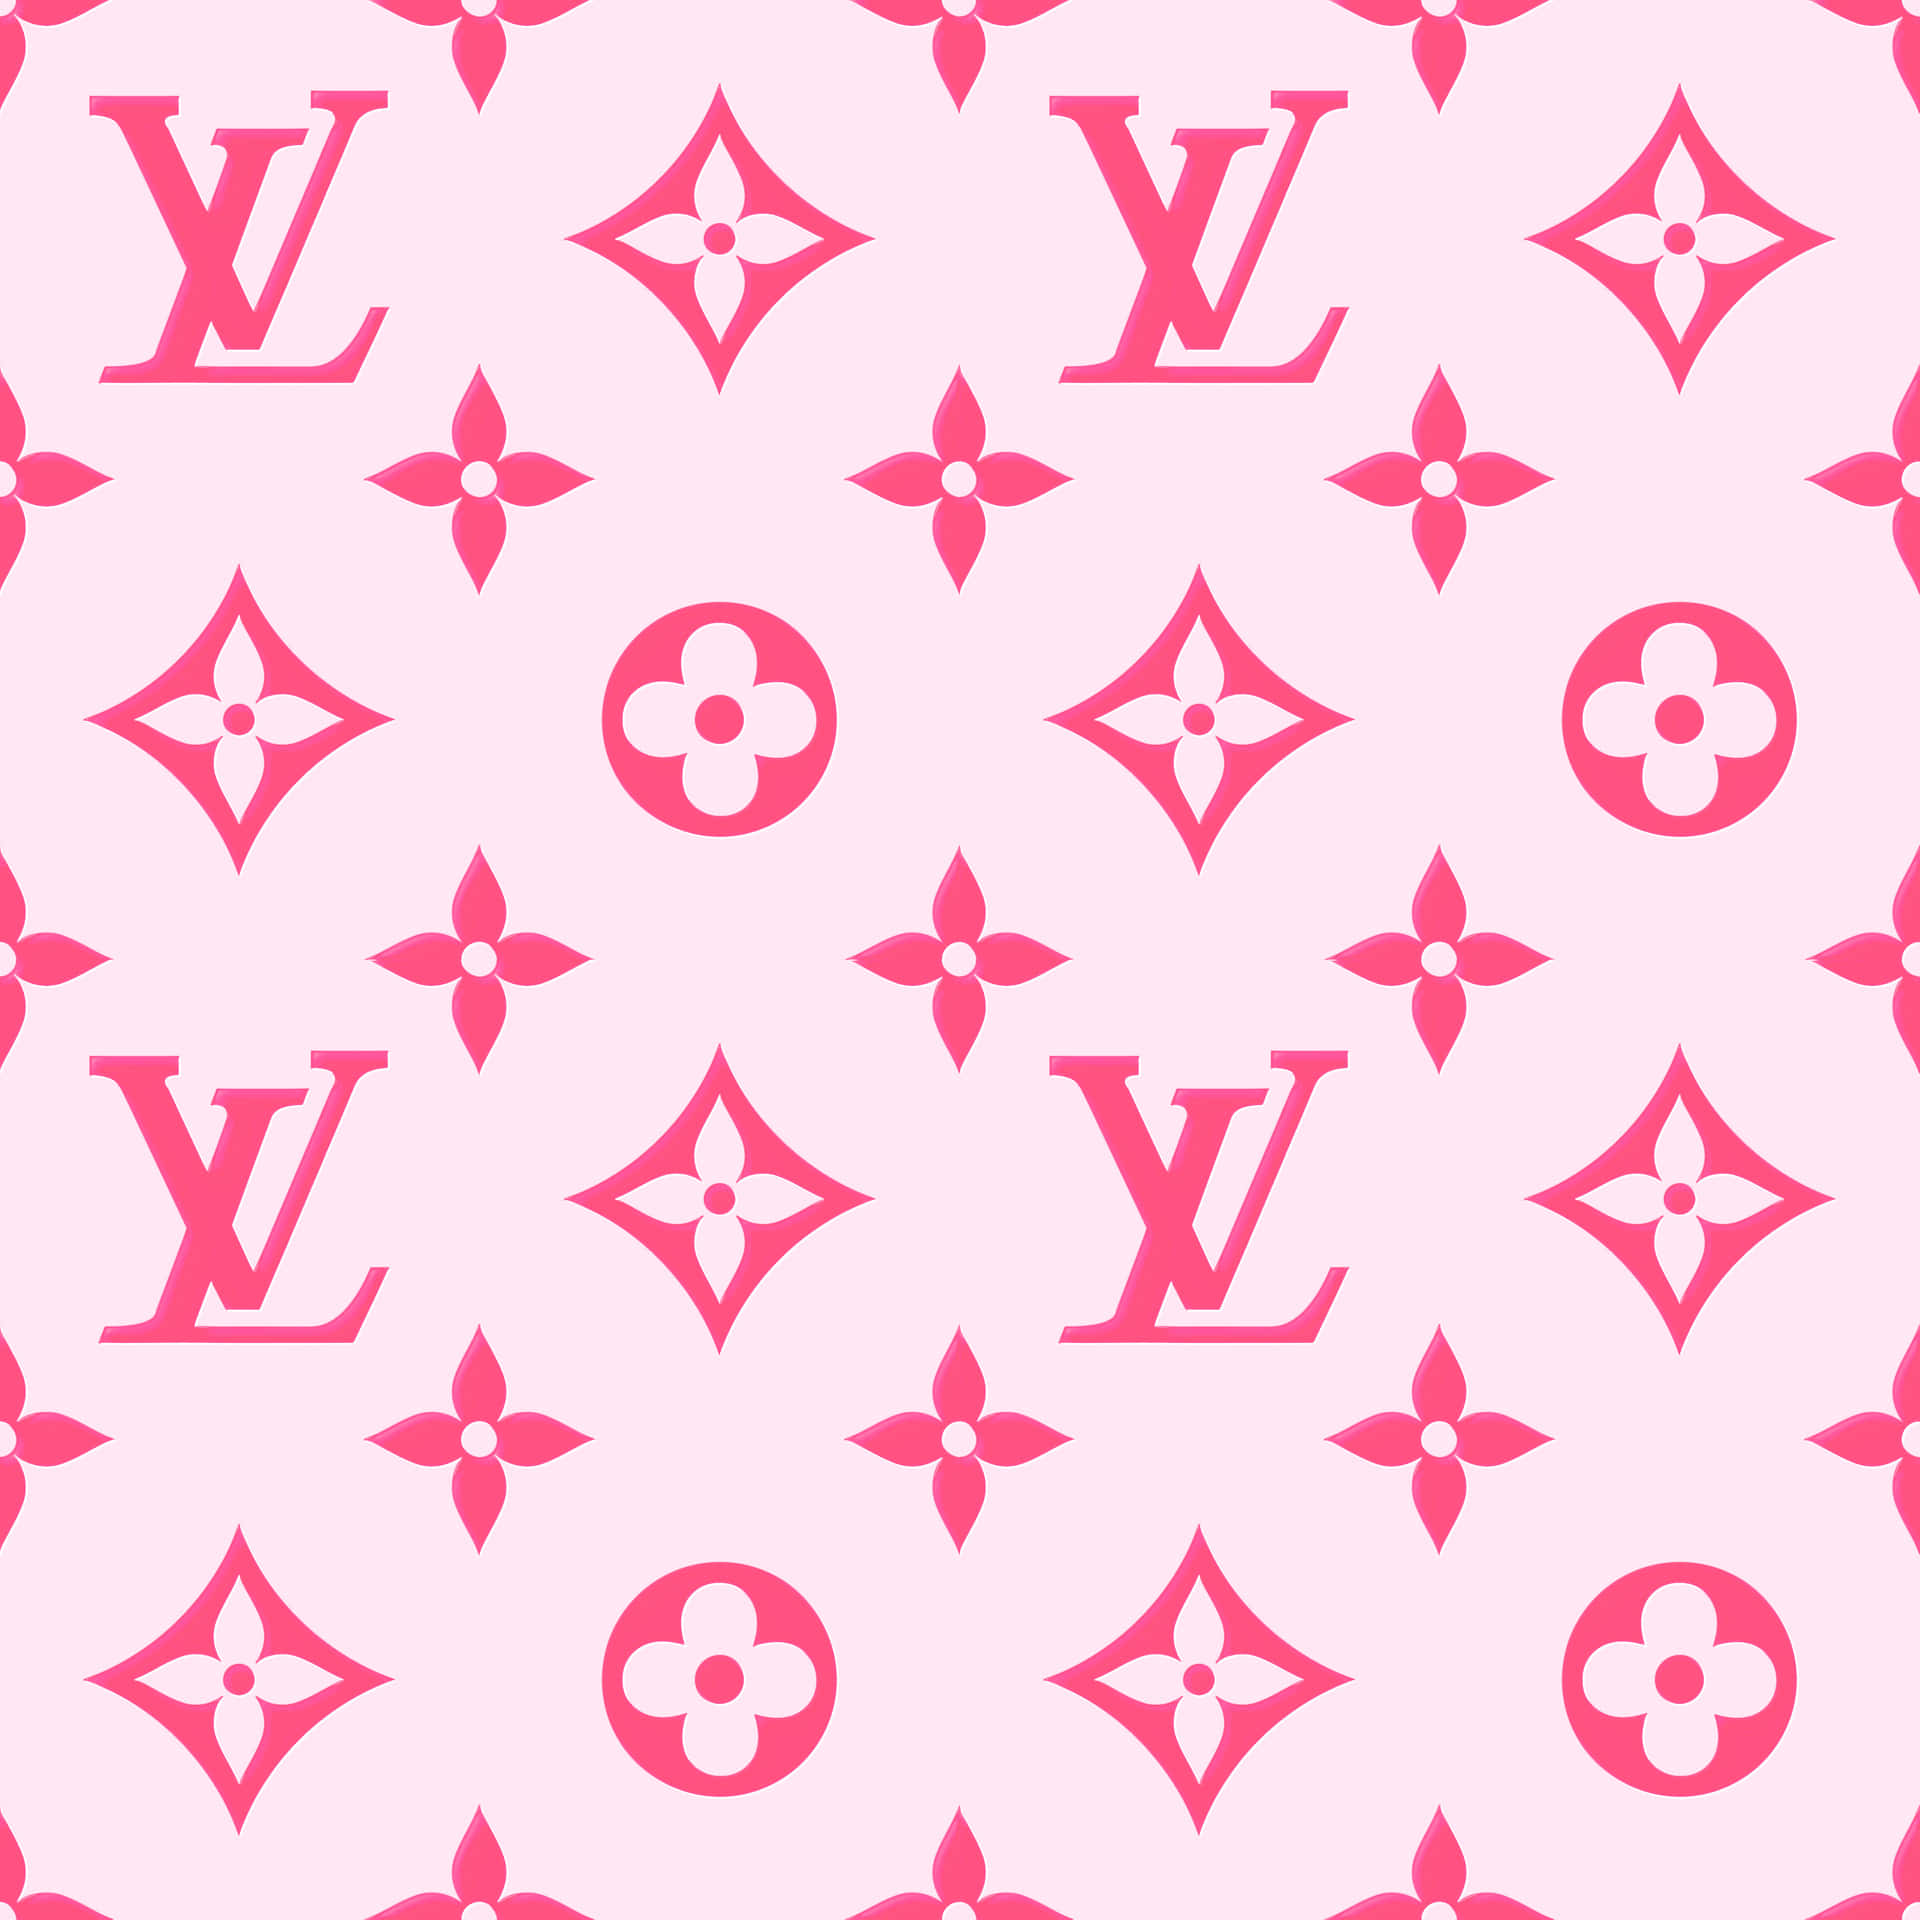 100+] Louis Vuitton Pink Wallpapers